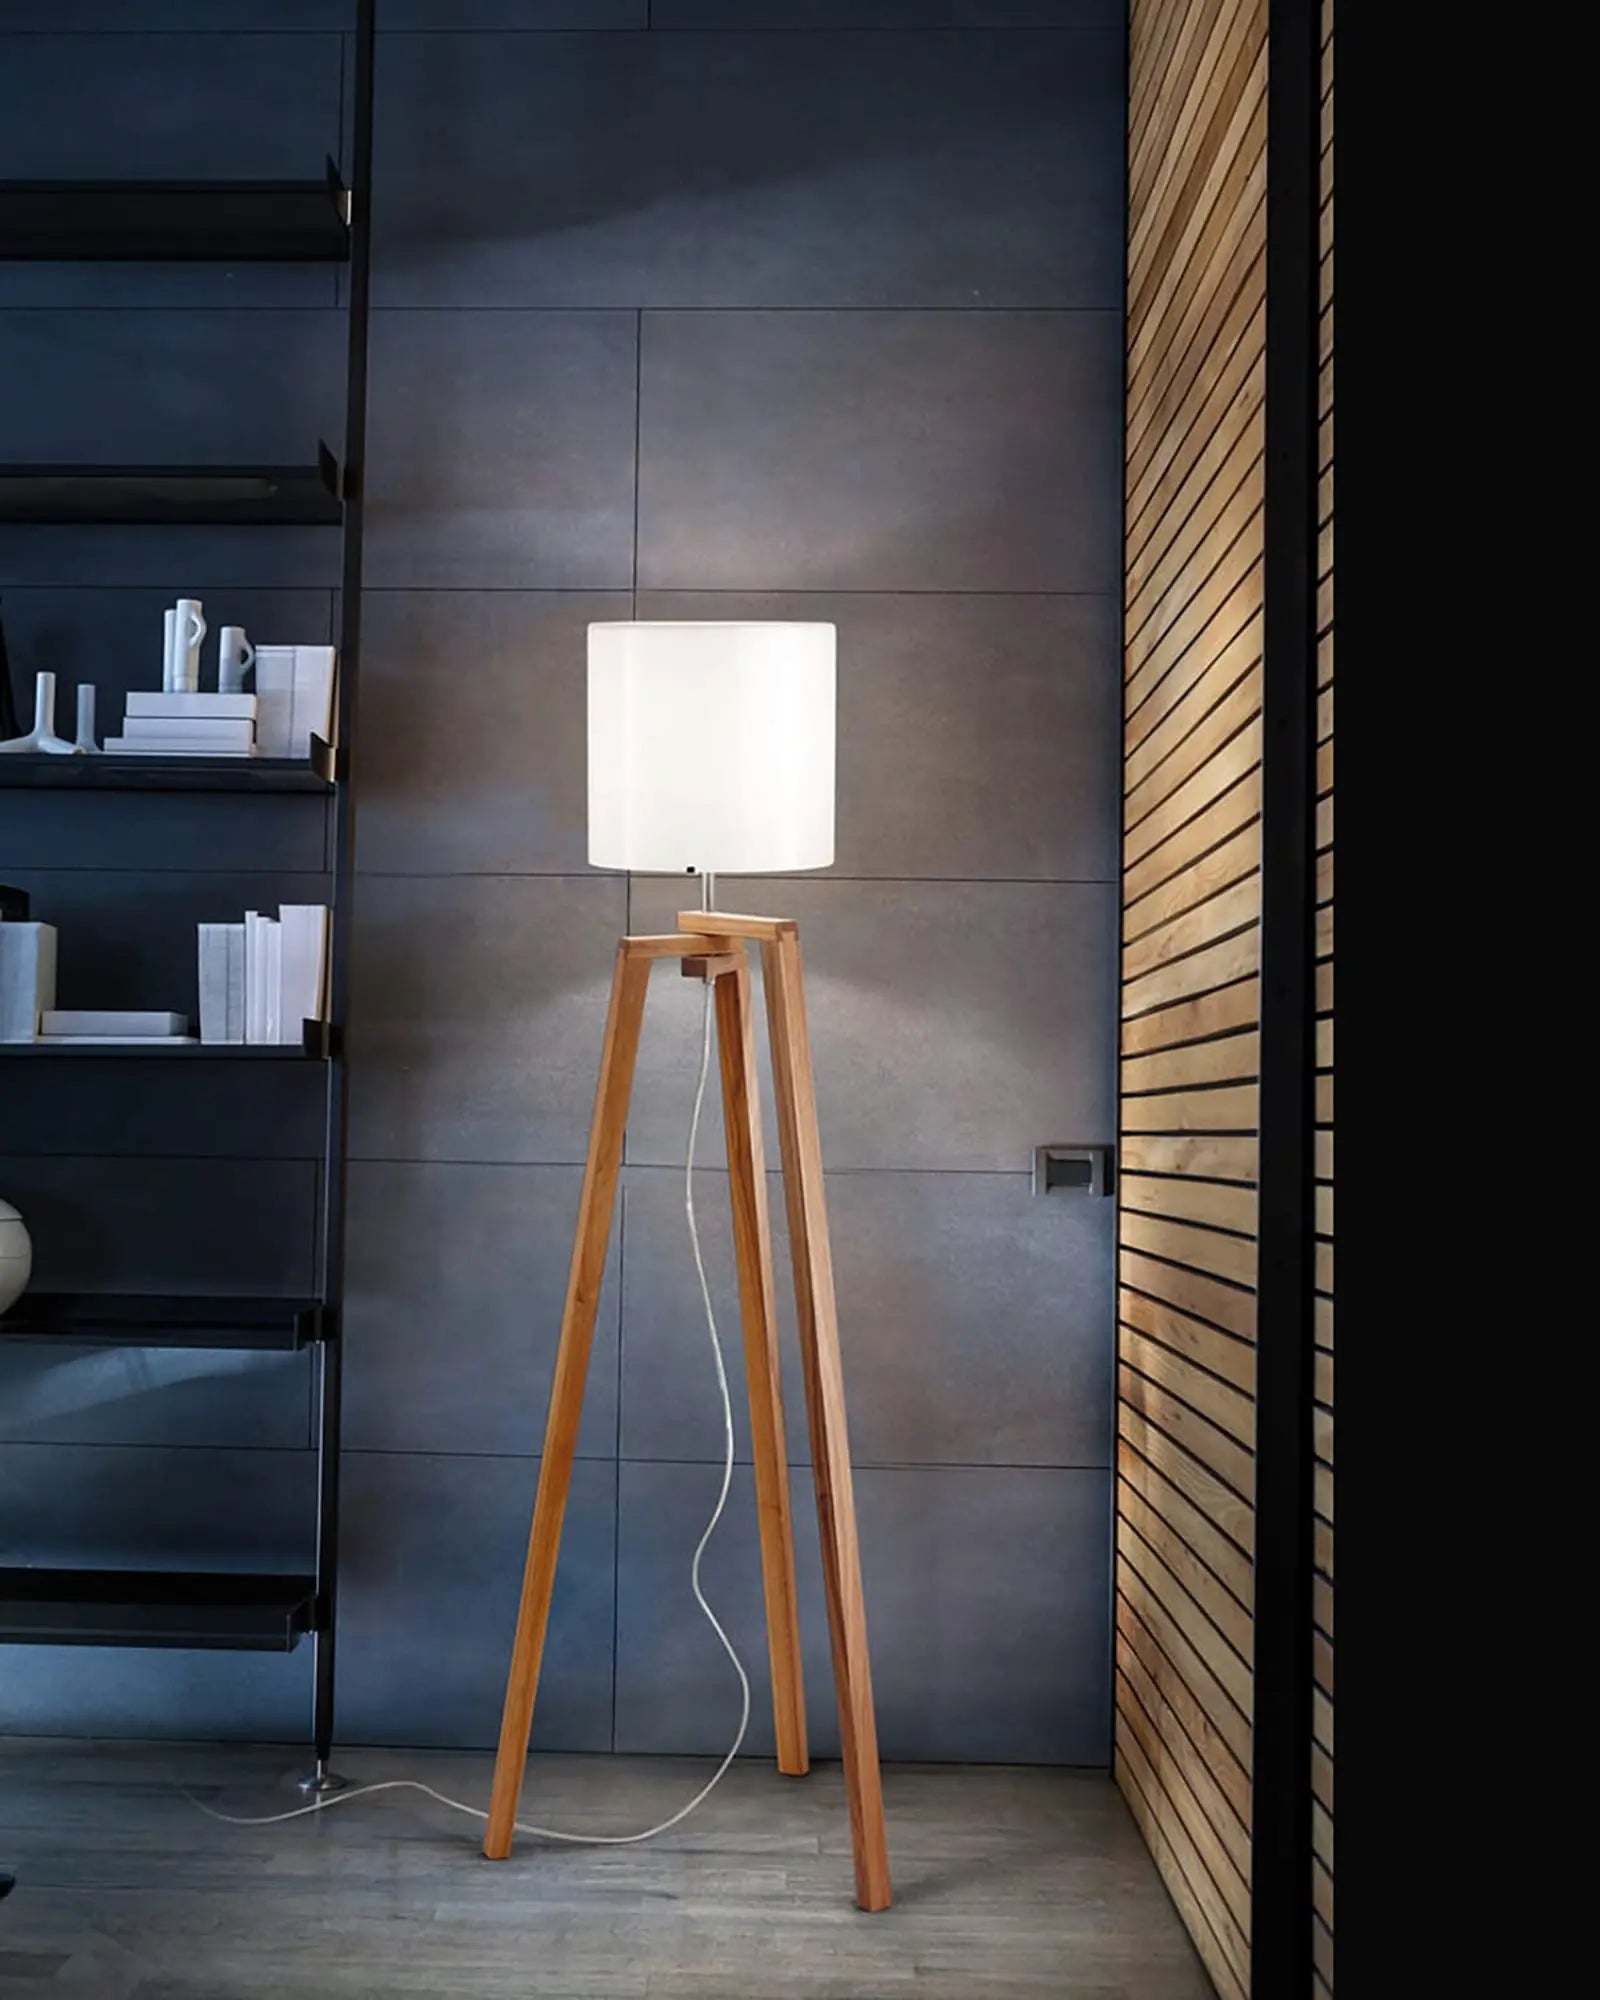 Trepai timber and glass contemporary floor lamp near a shelf unit